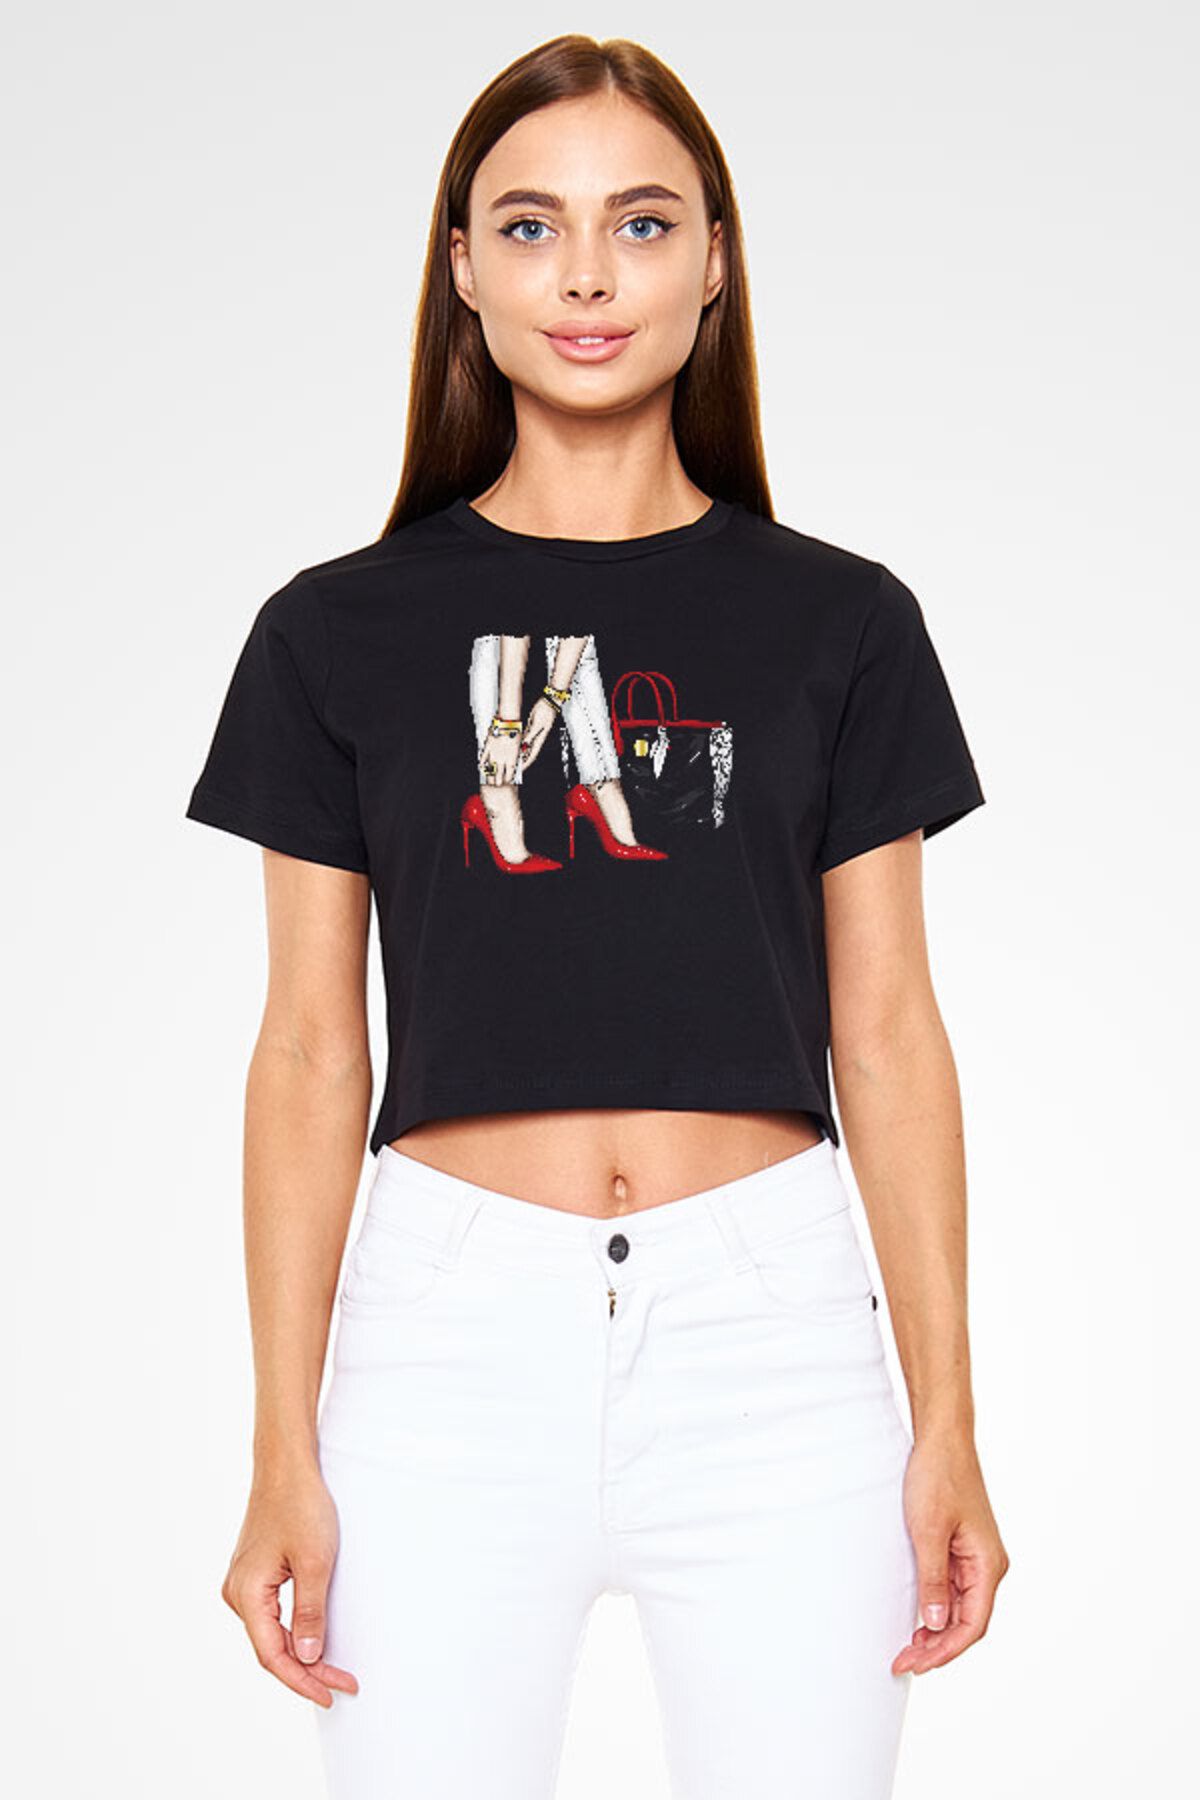 Darkhane Kırmızı Stiletto ve Çanta Fashion Siyah Unisex Crop Top Tişört T-Shirt